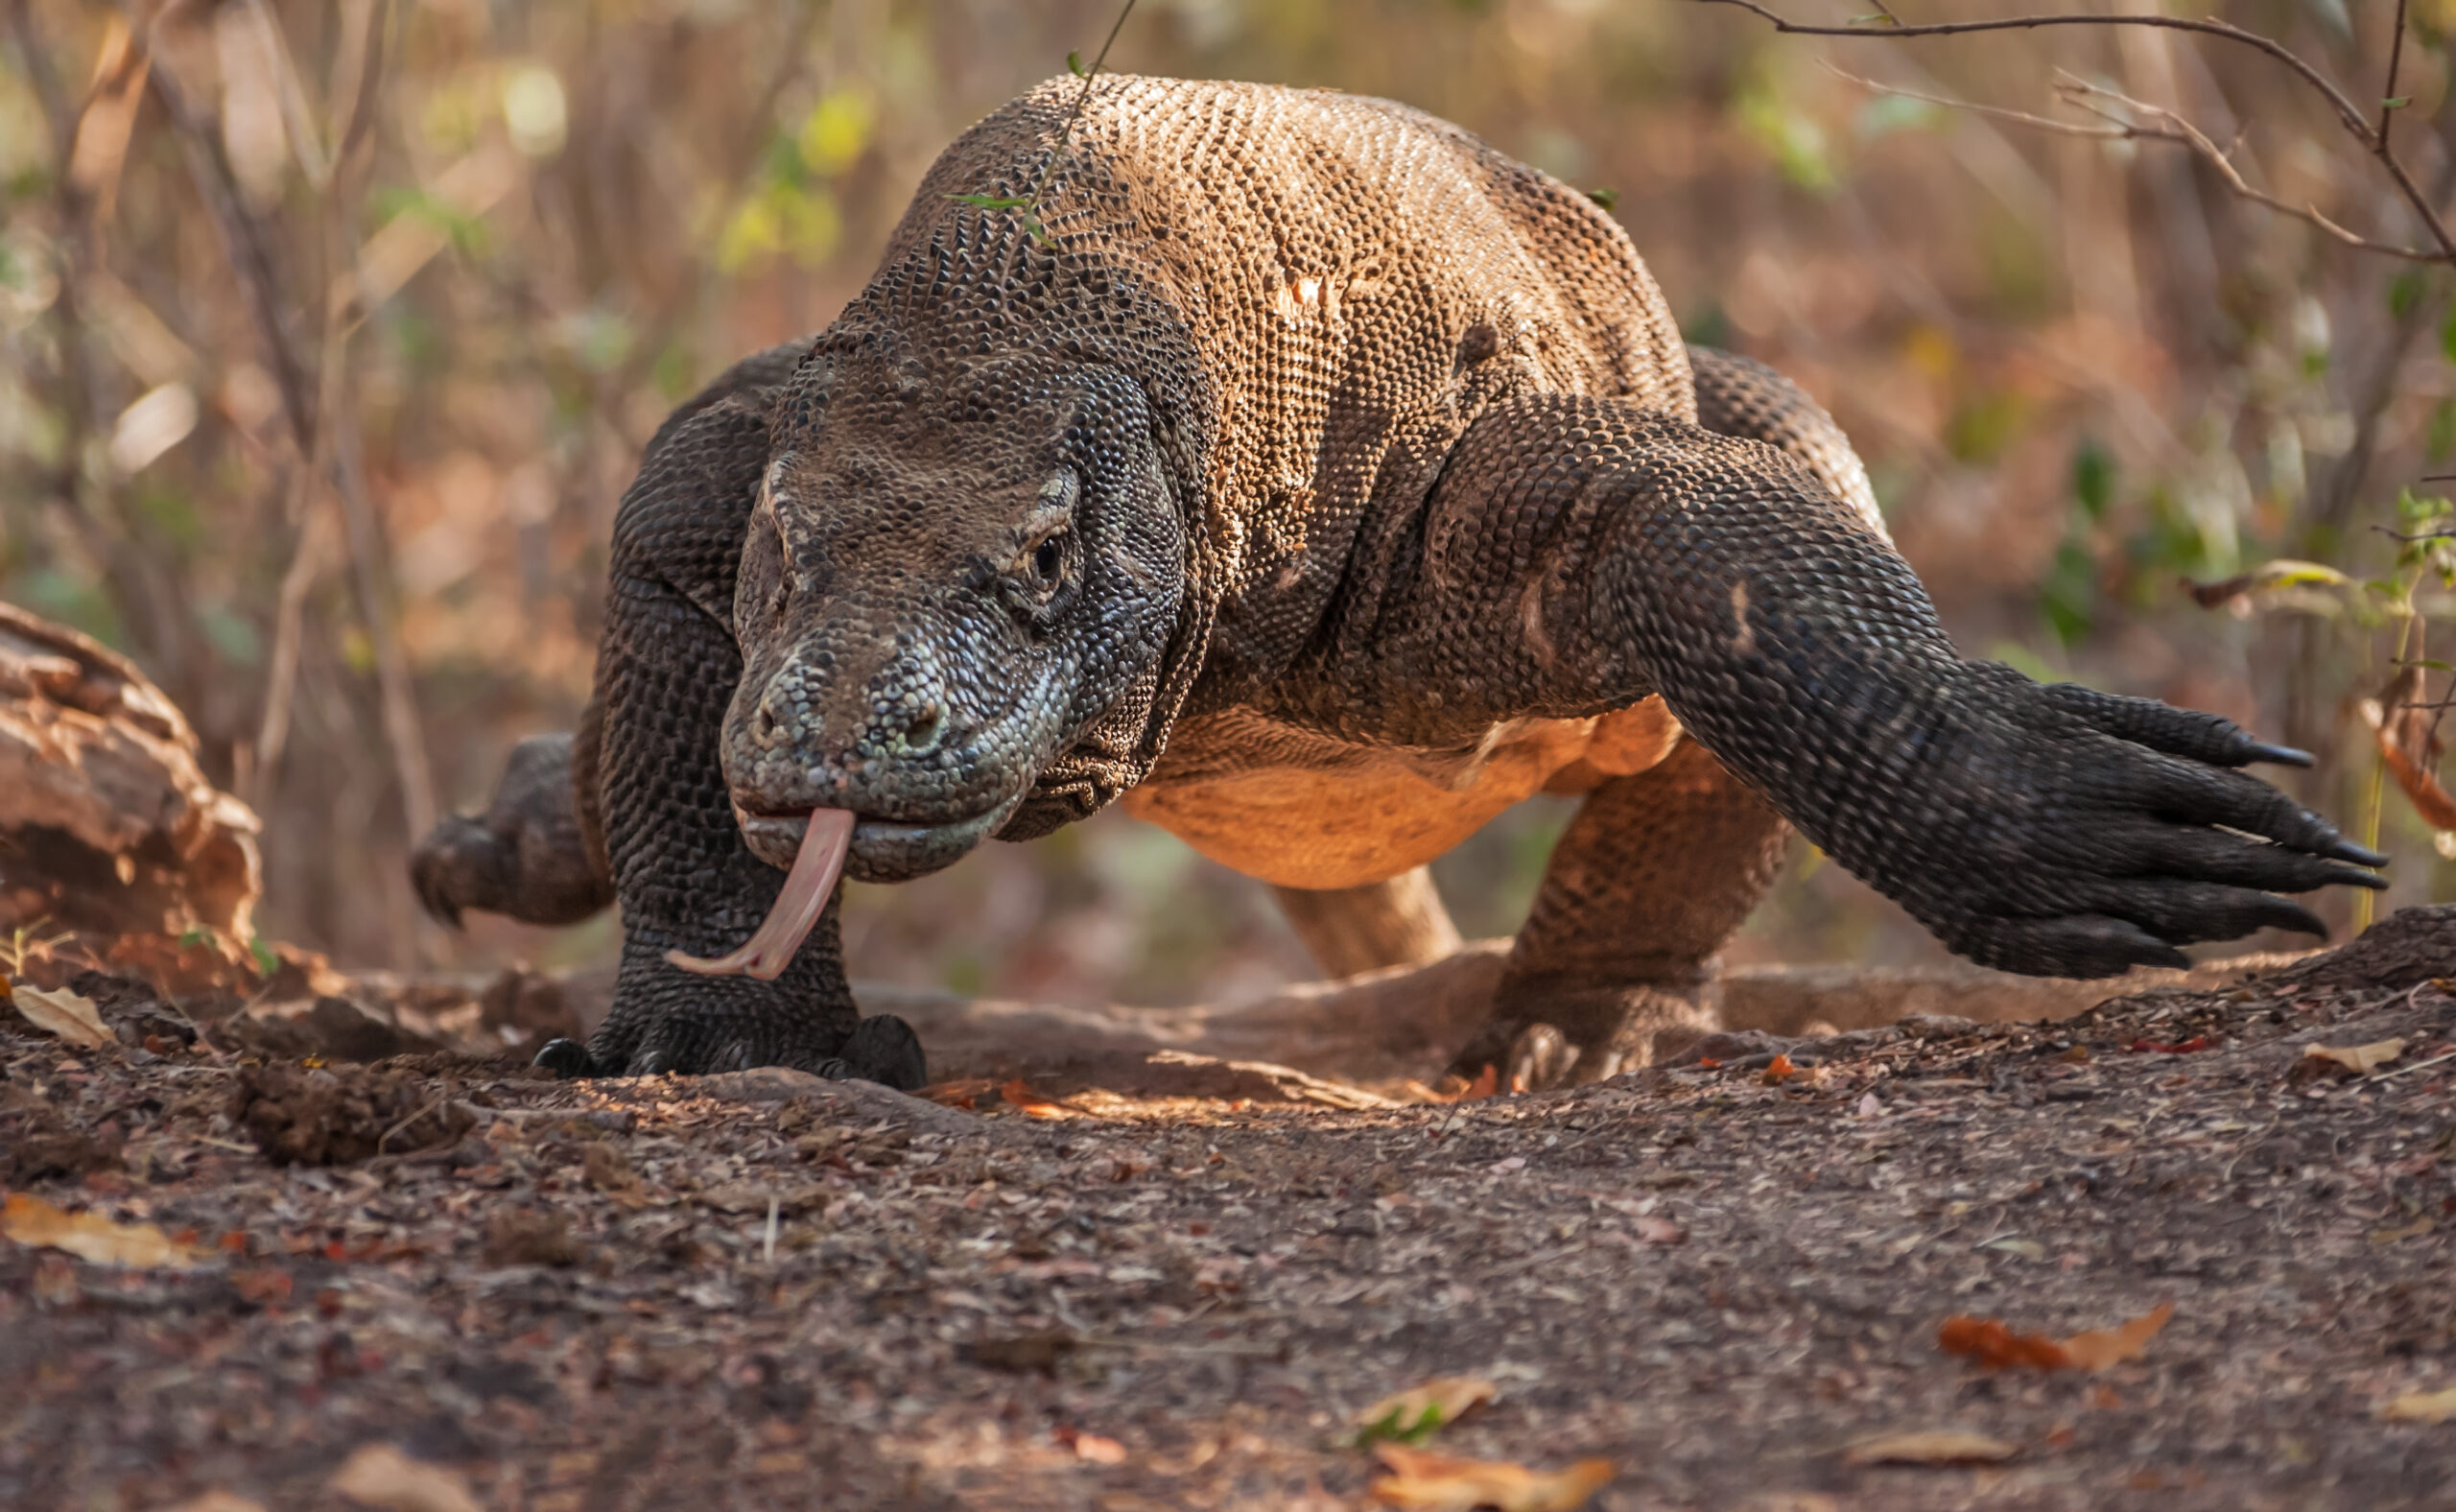 L’impressionnant varan de Komodo possède des dents similaires à celles des grands dinosaures carnivores bipèdes